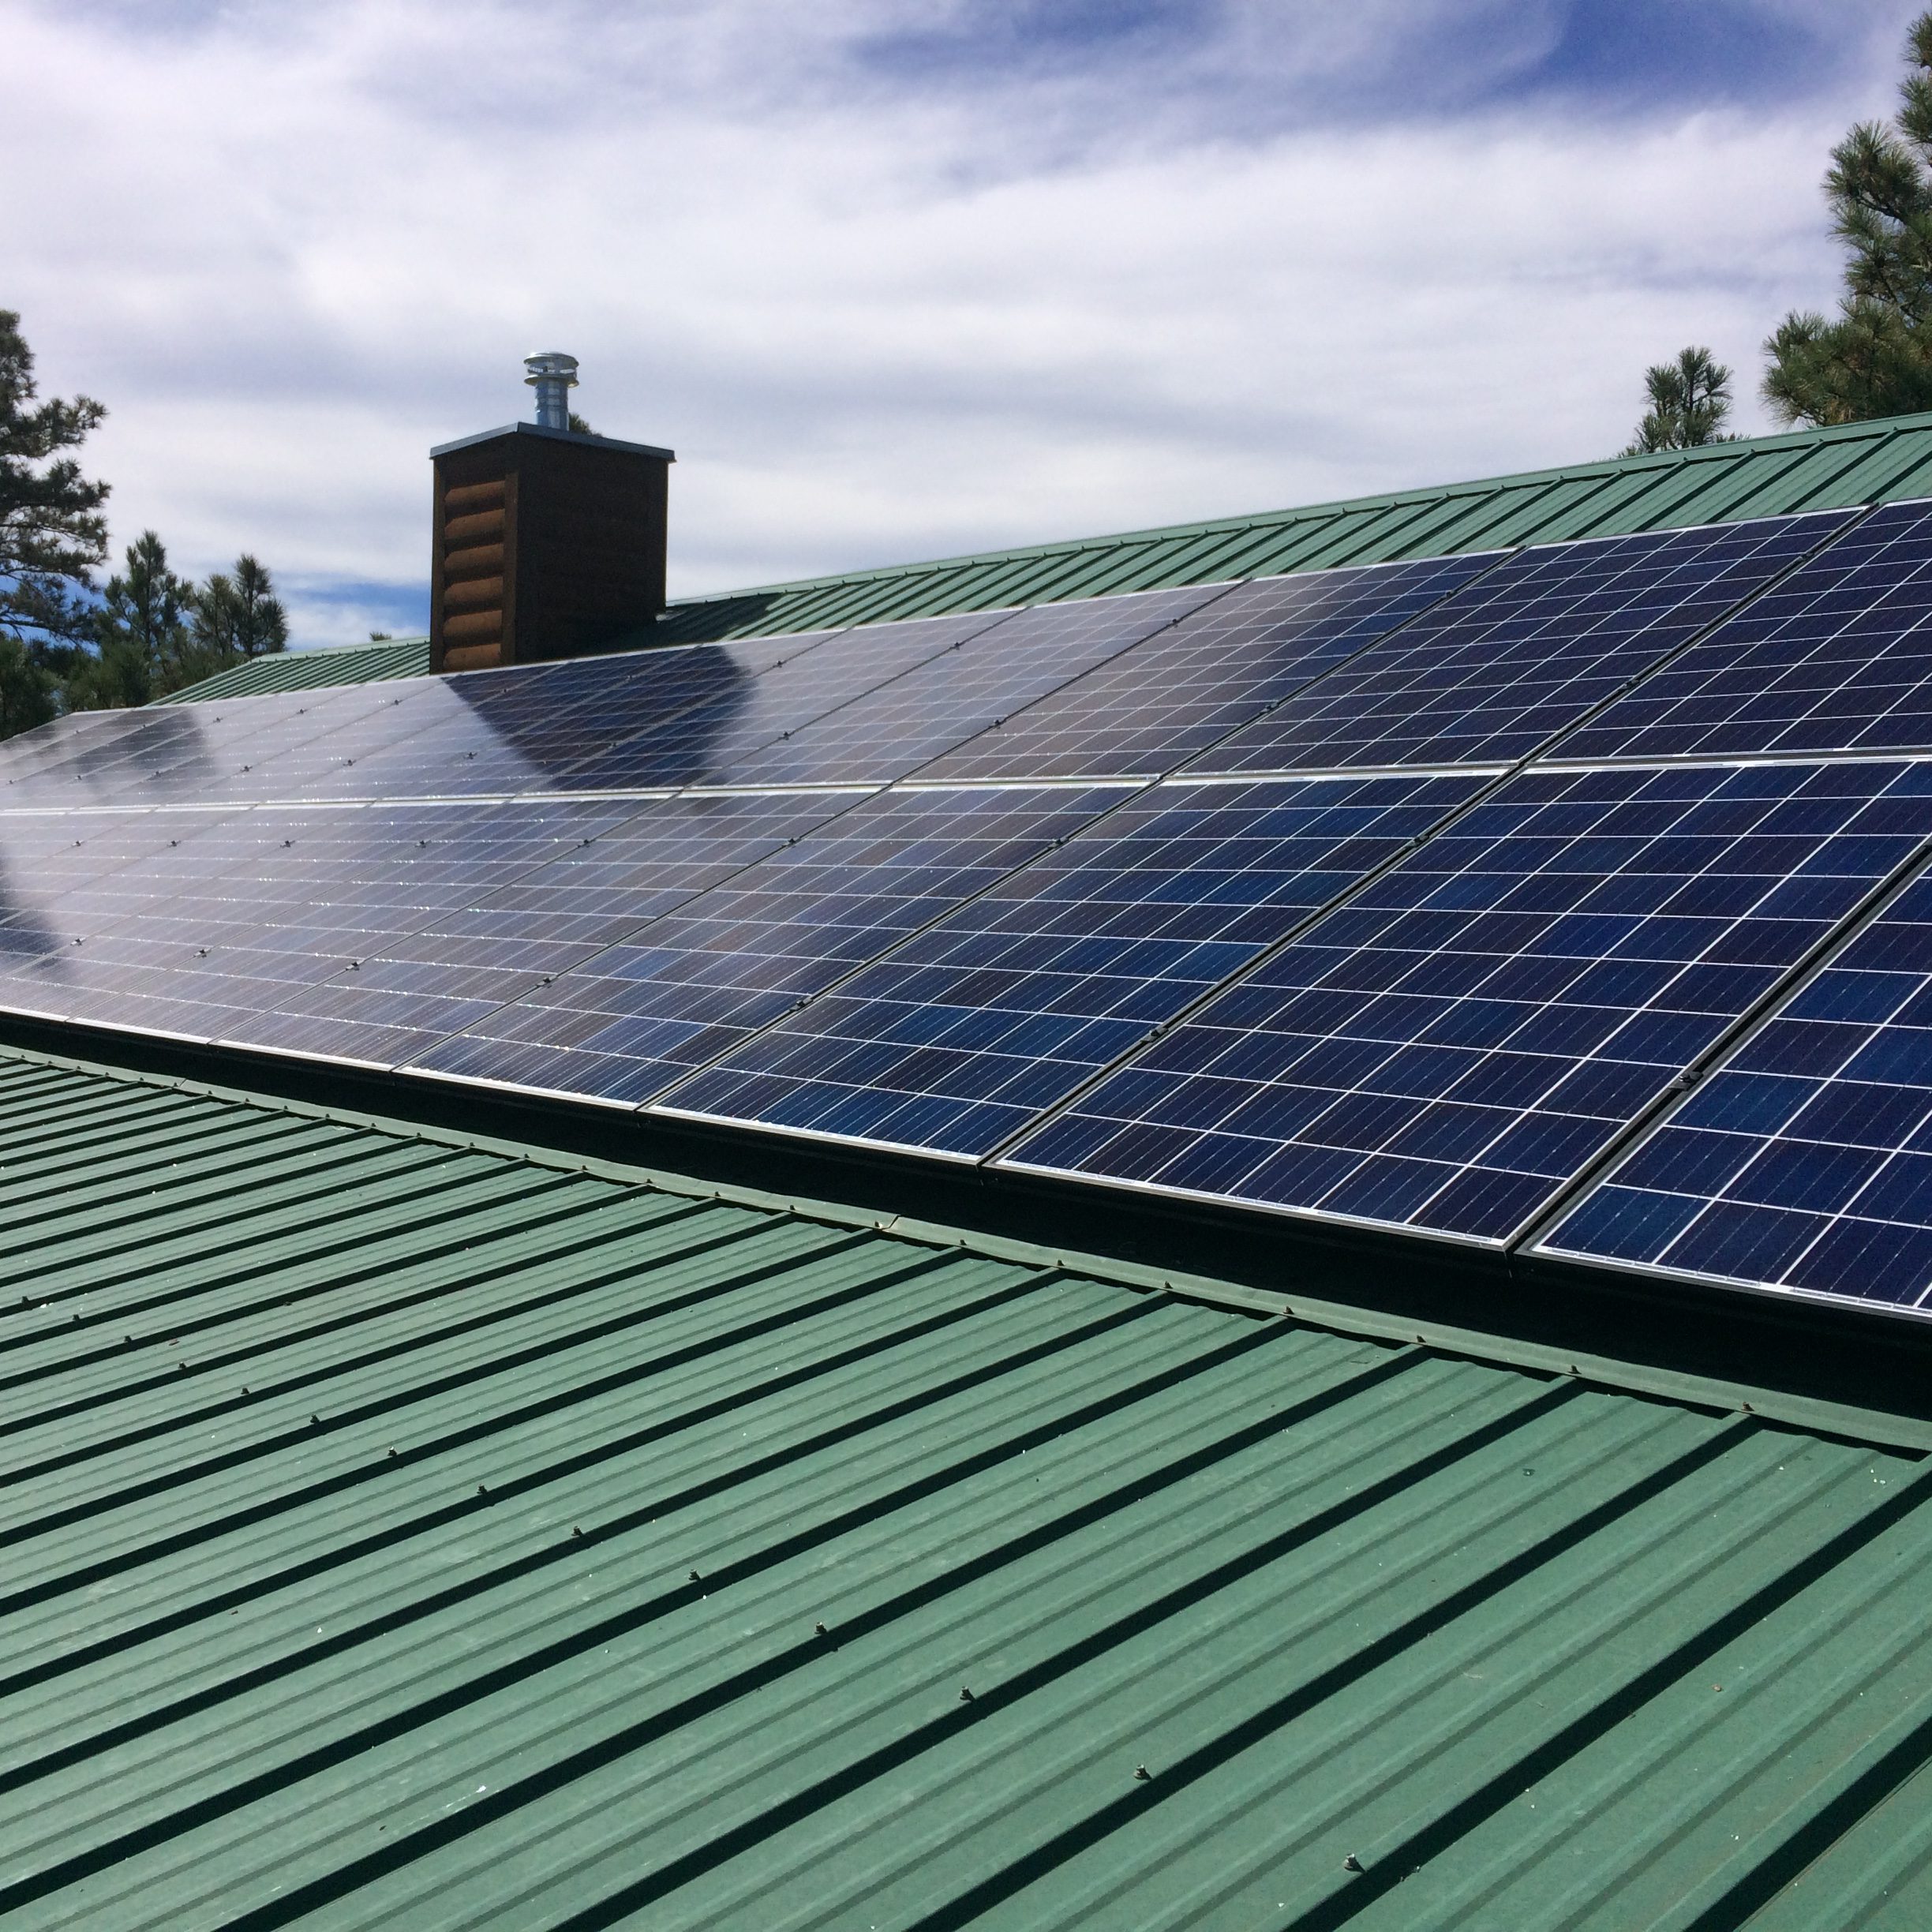 Show low Arizona solar installation contractor call today BCI solar local solar professional installer 928-537-1708